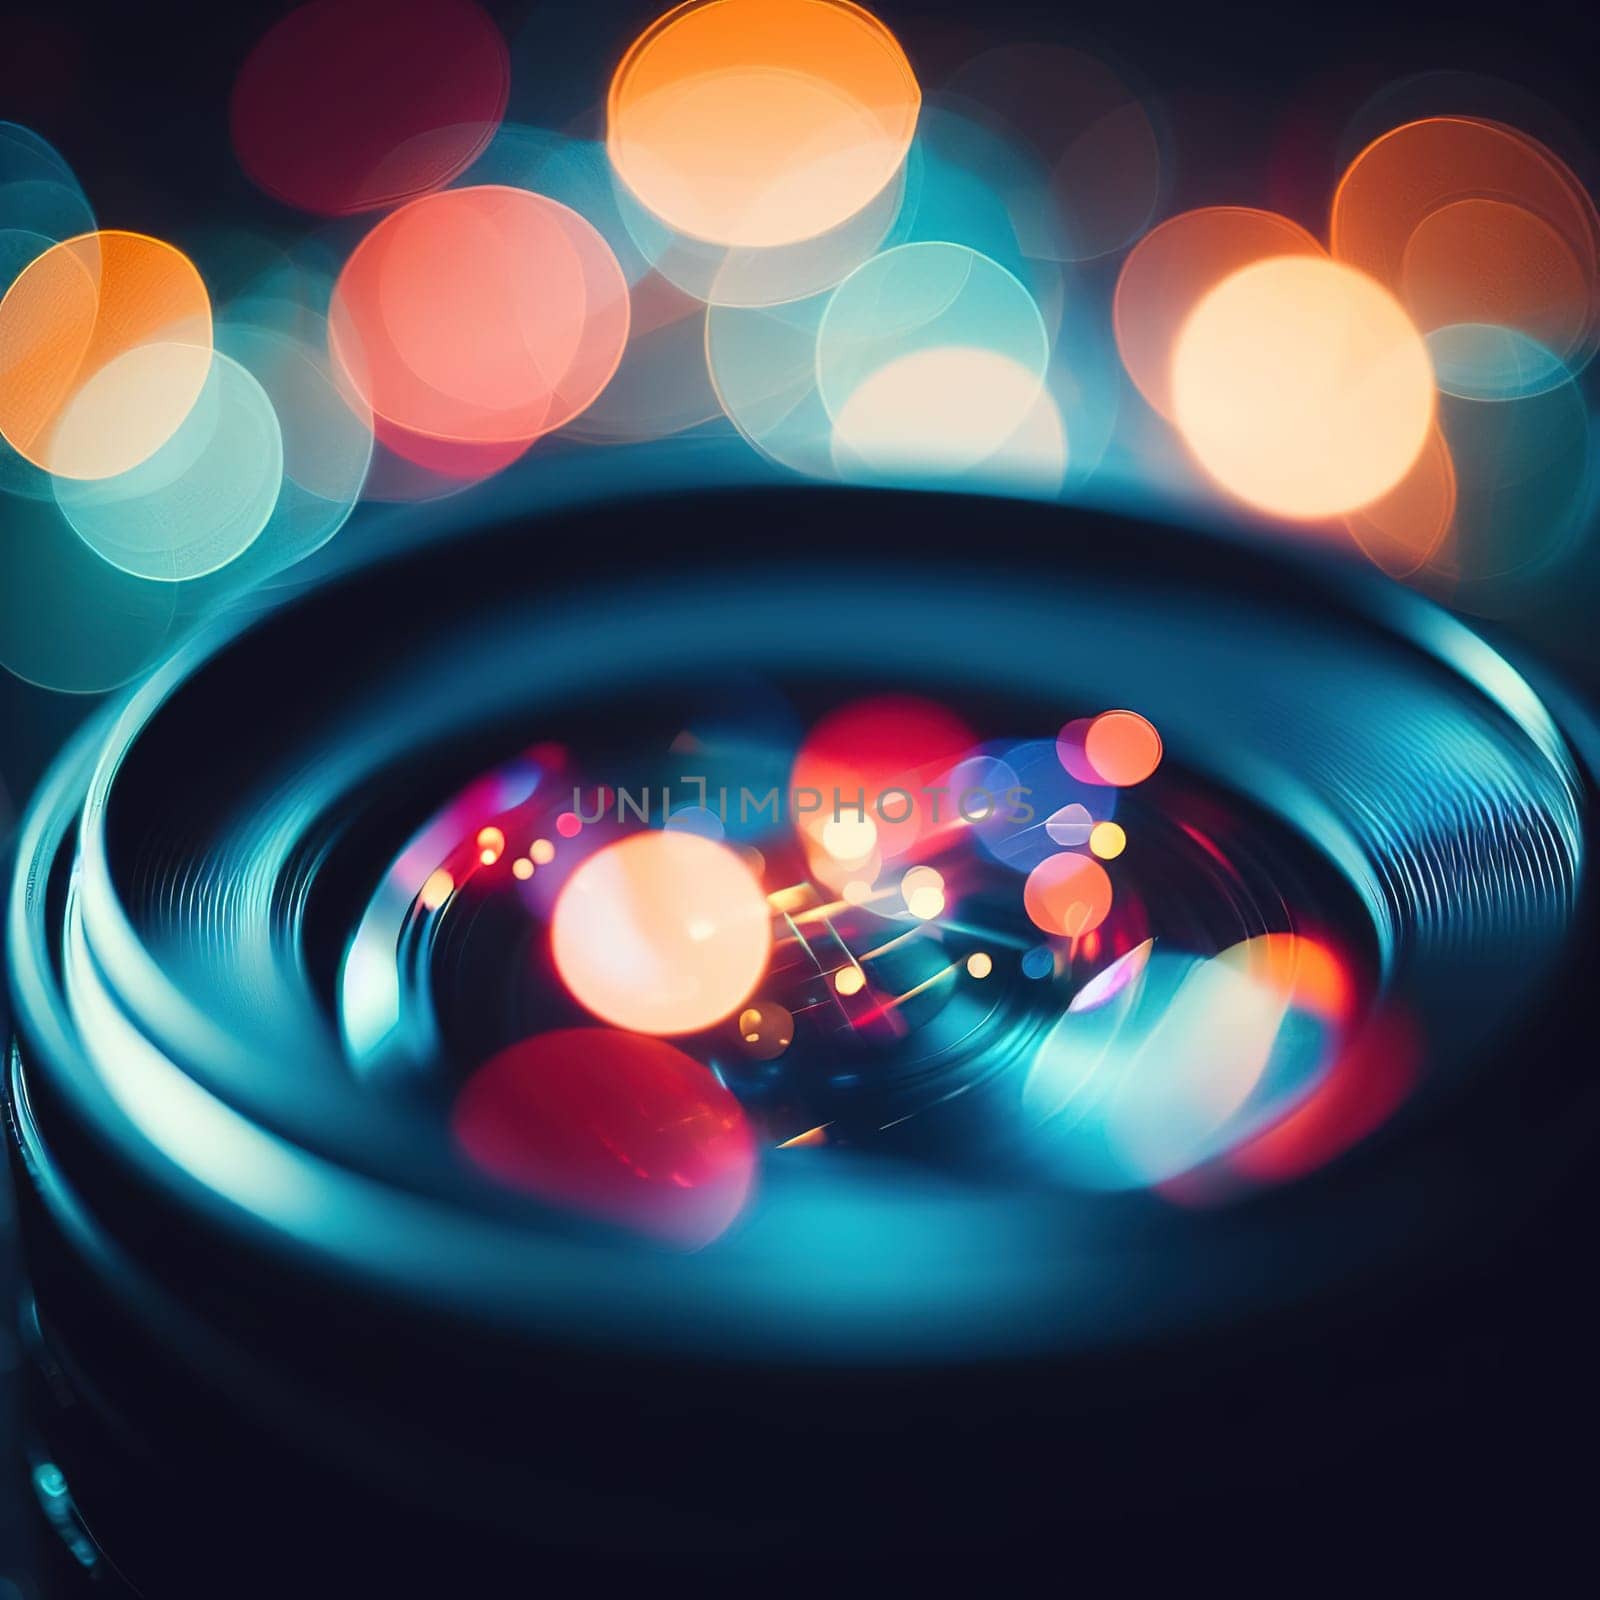 High aperture lens blur (bokeh). High quality illustration